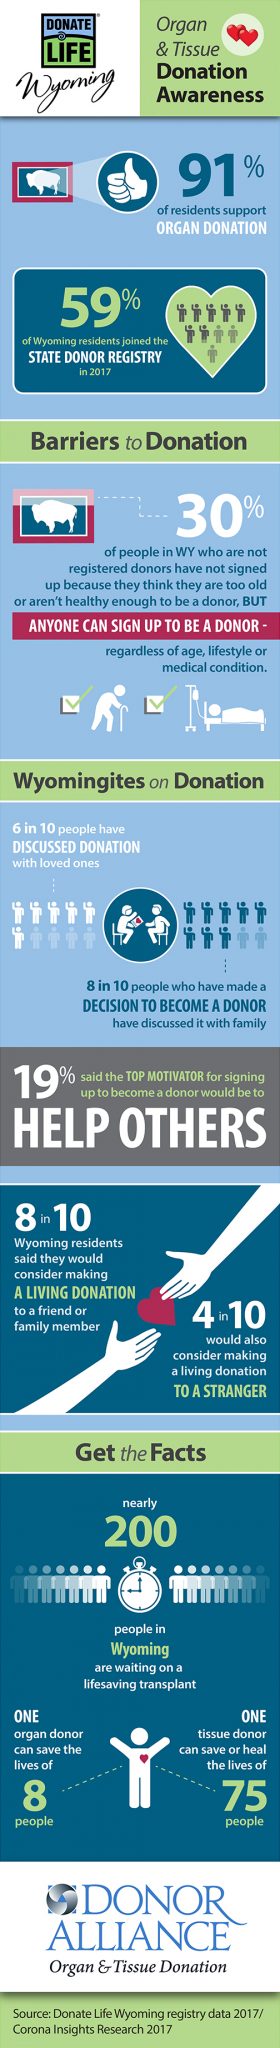 Organ donation awareness Wyoming